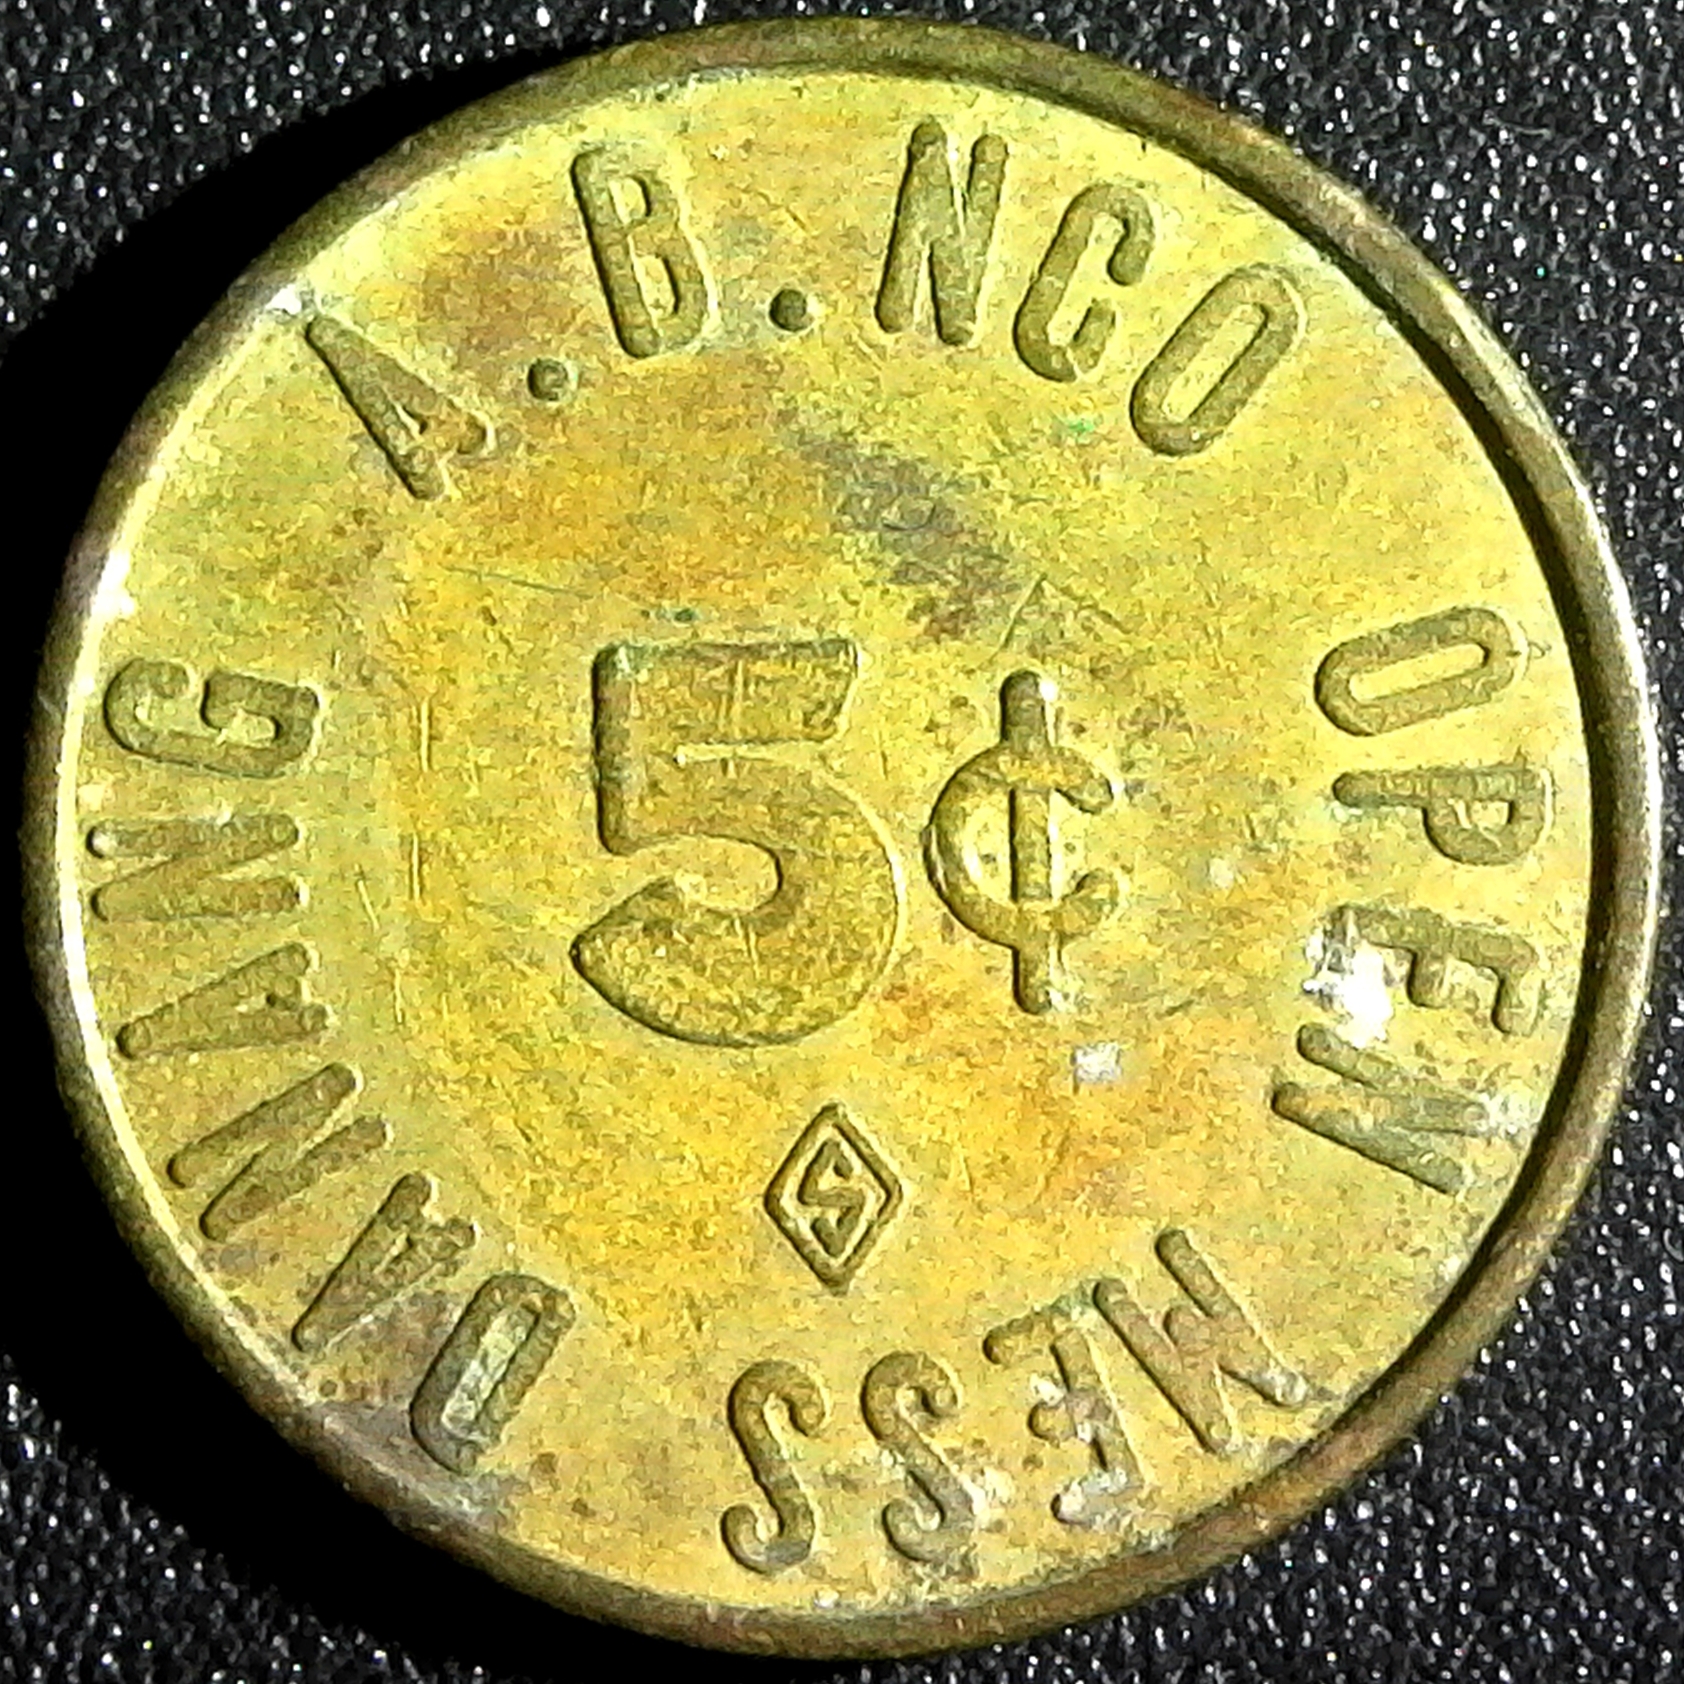 Vietnam 5 cents Danang token obv.jpg